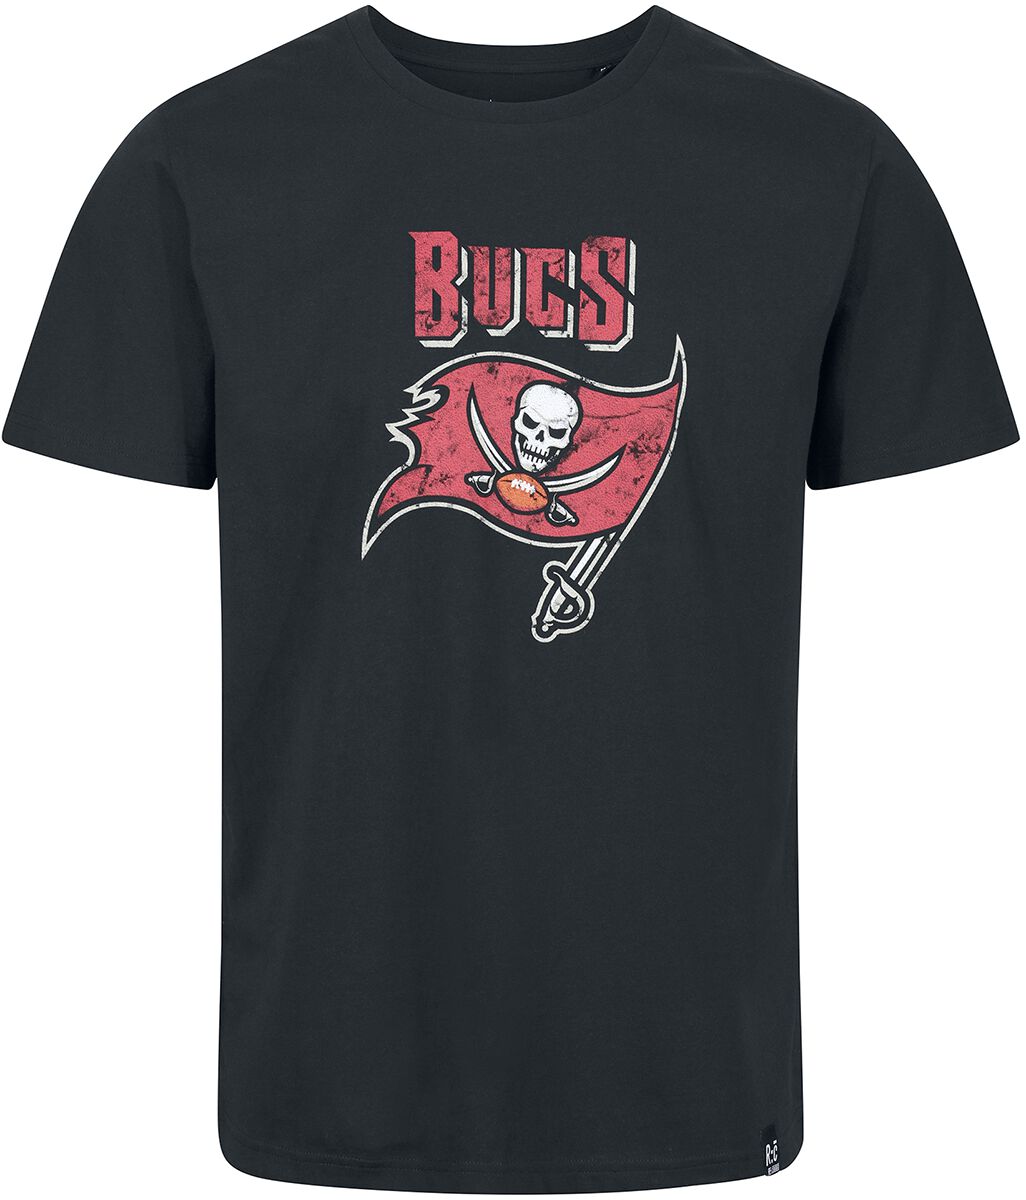 NFL NFL BUCCS LOGO T-Shirt schwarz in L